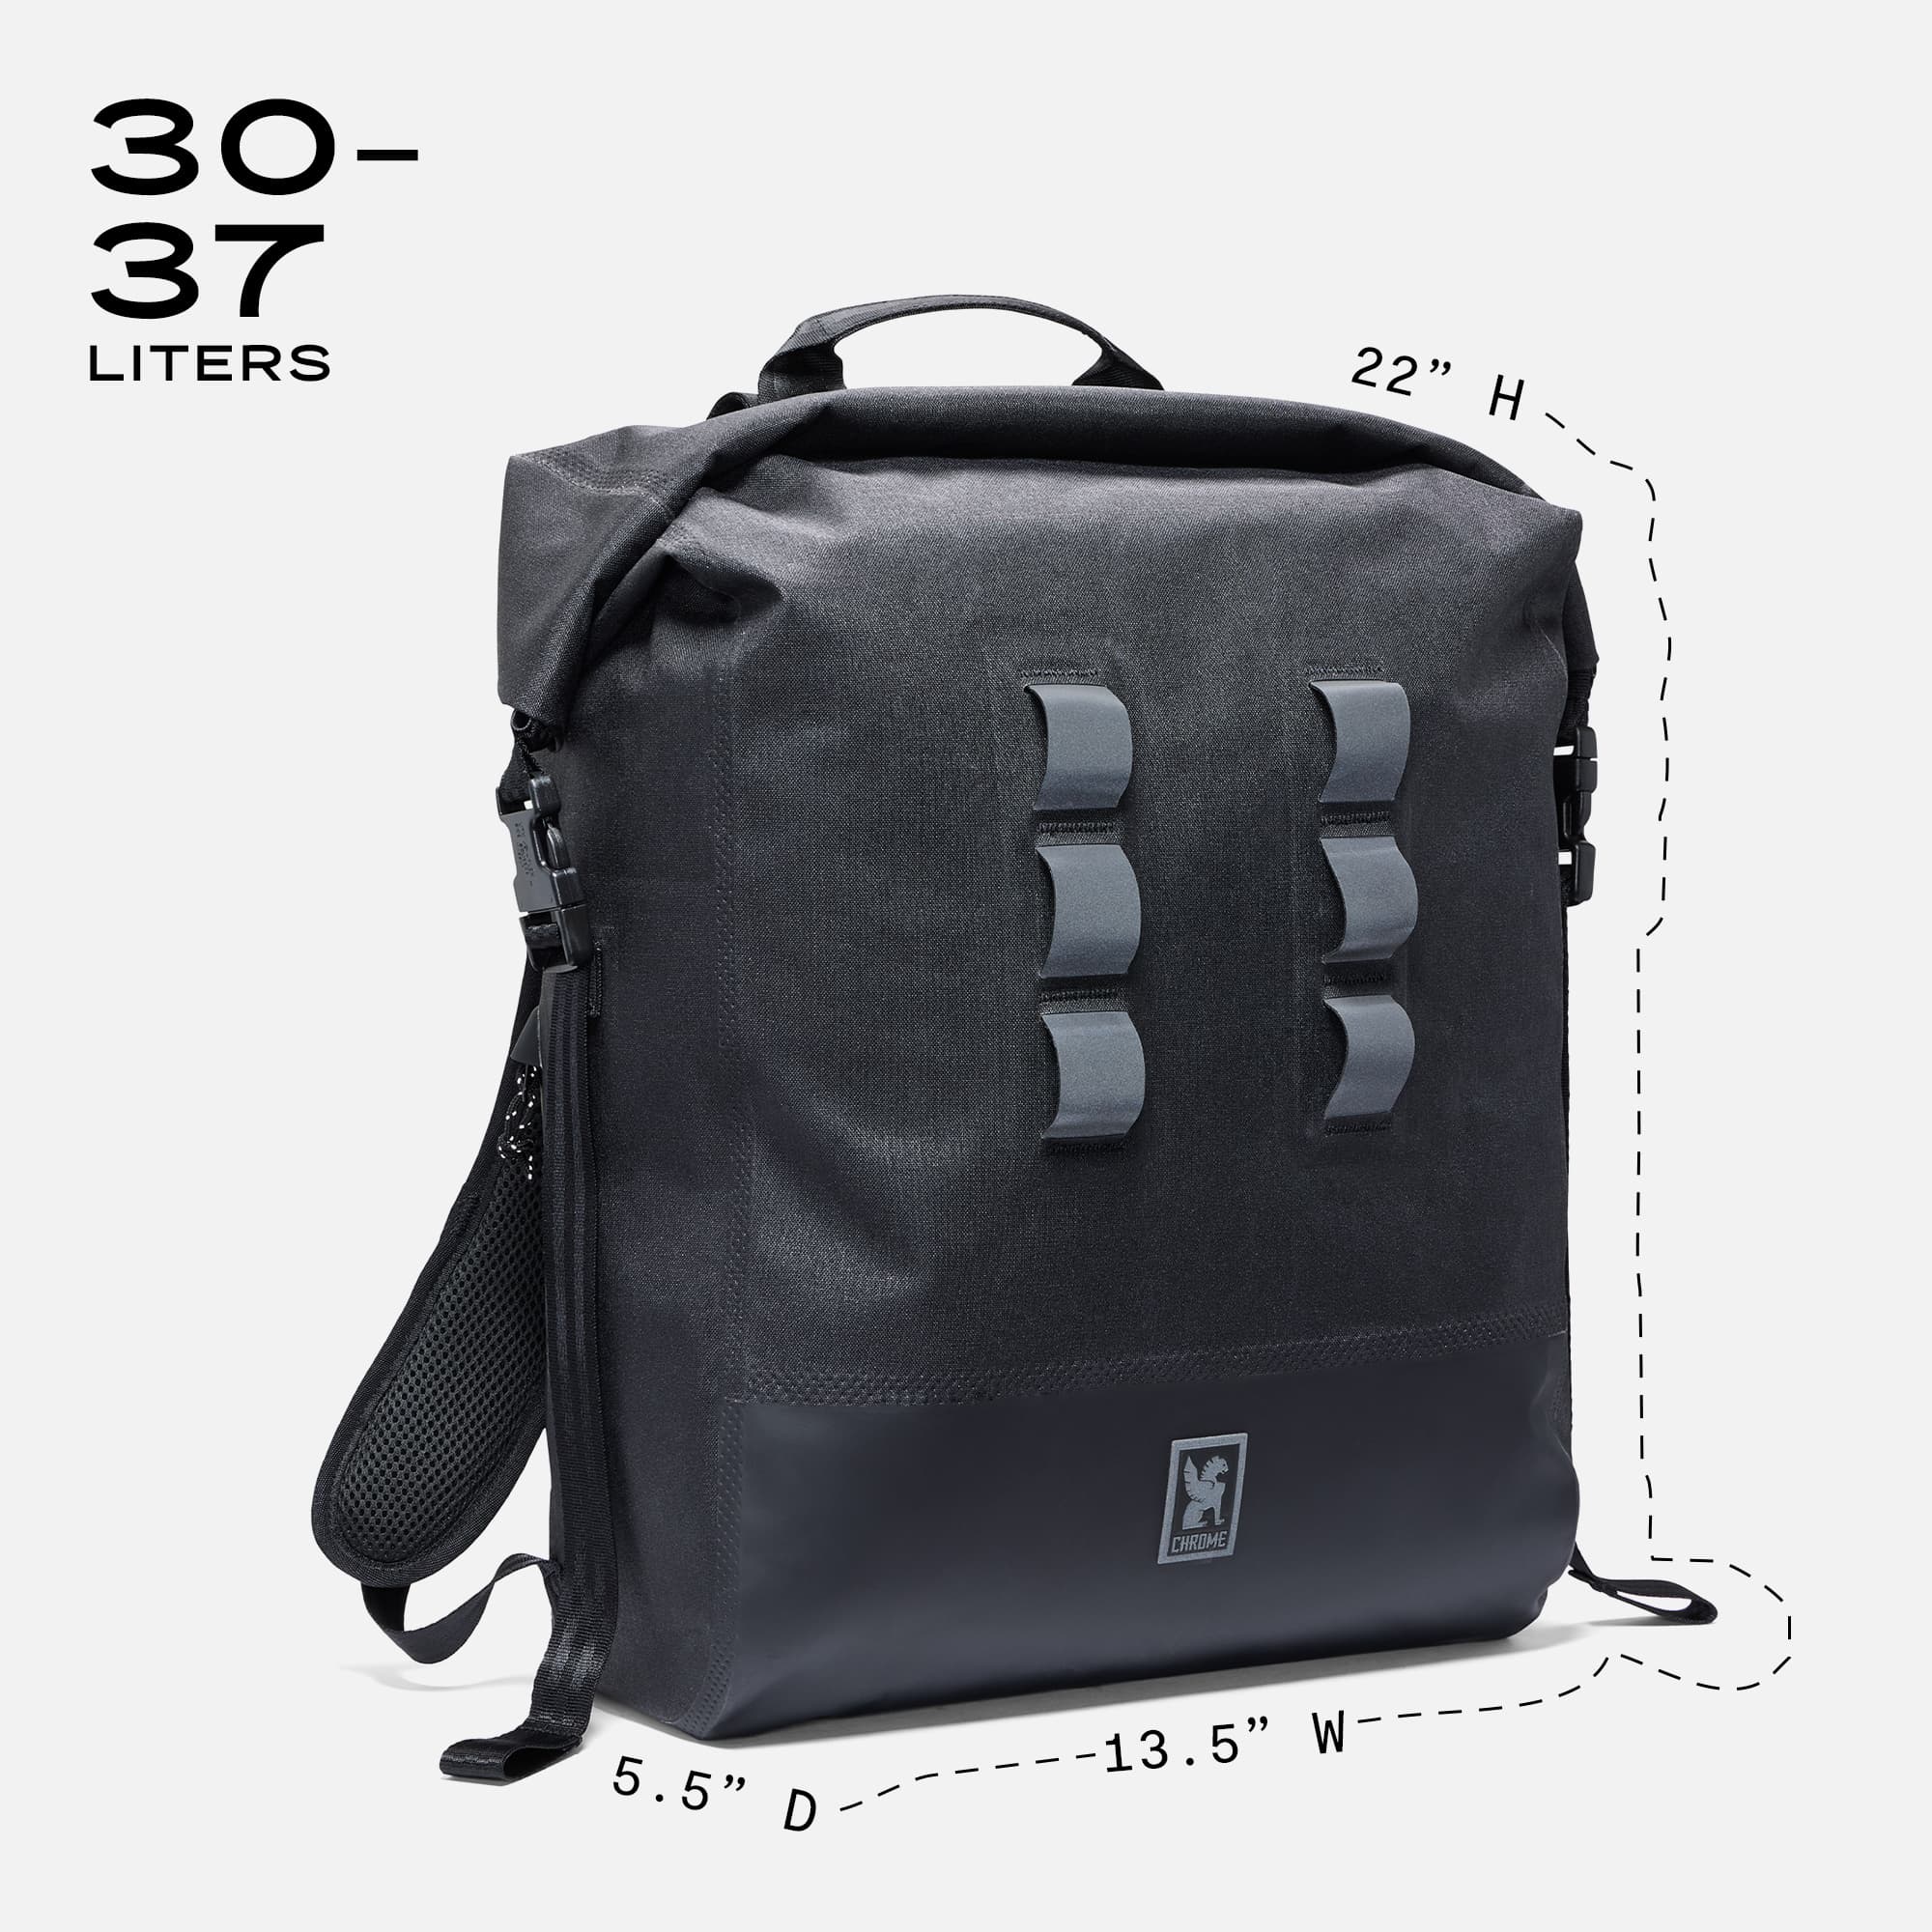 Urban Ex 30L Backpack sizing image